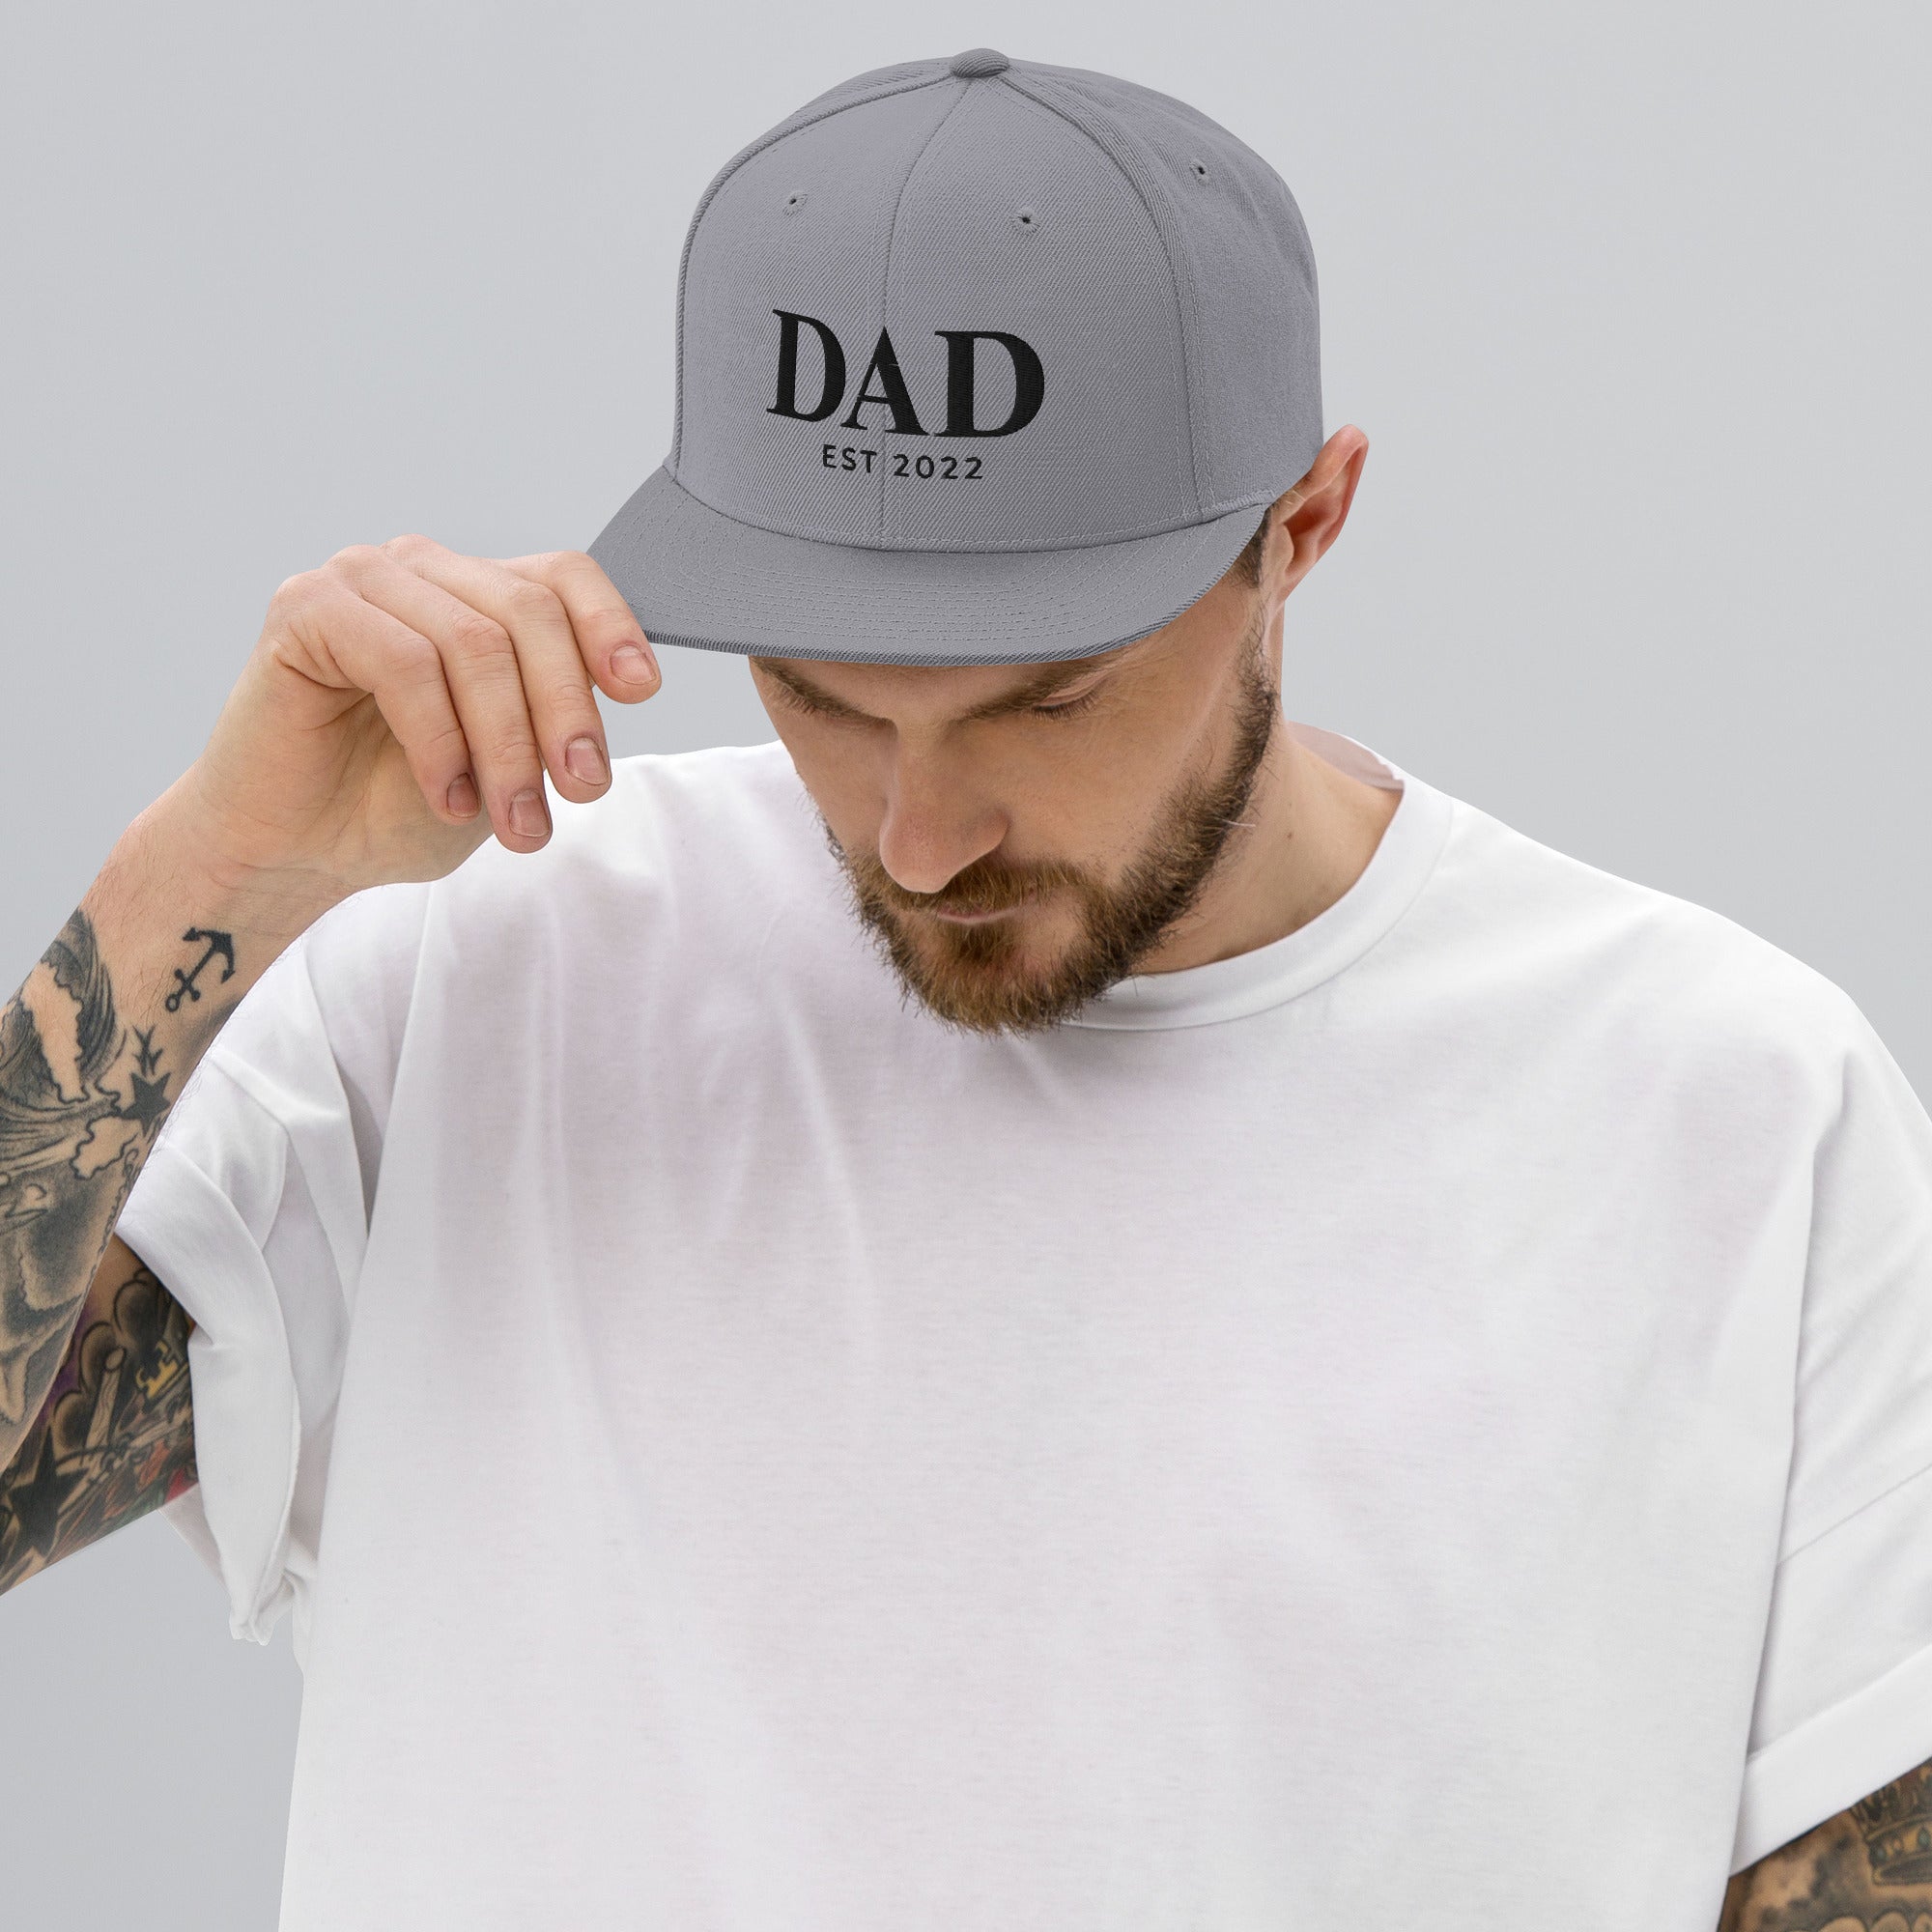 The 2022 Hat Store EST DAD Ends & Snapback – Odds